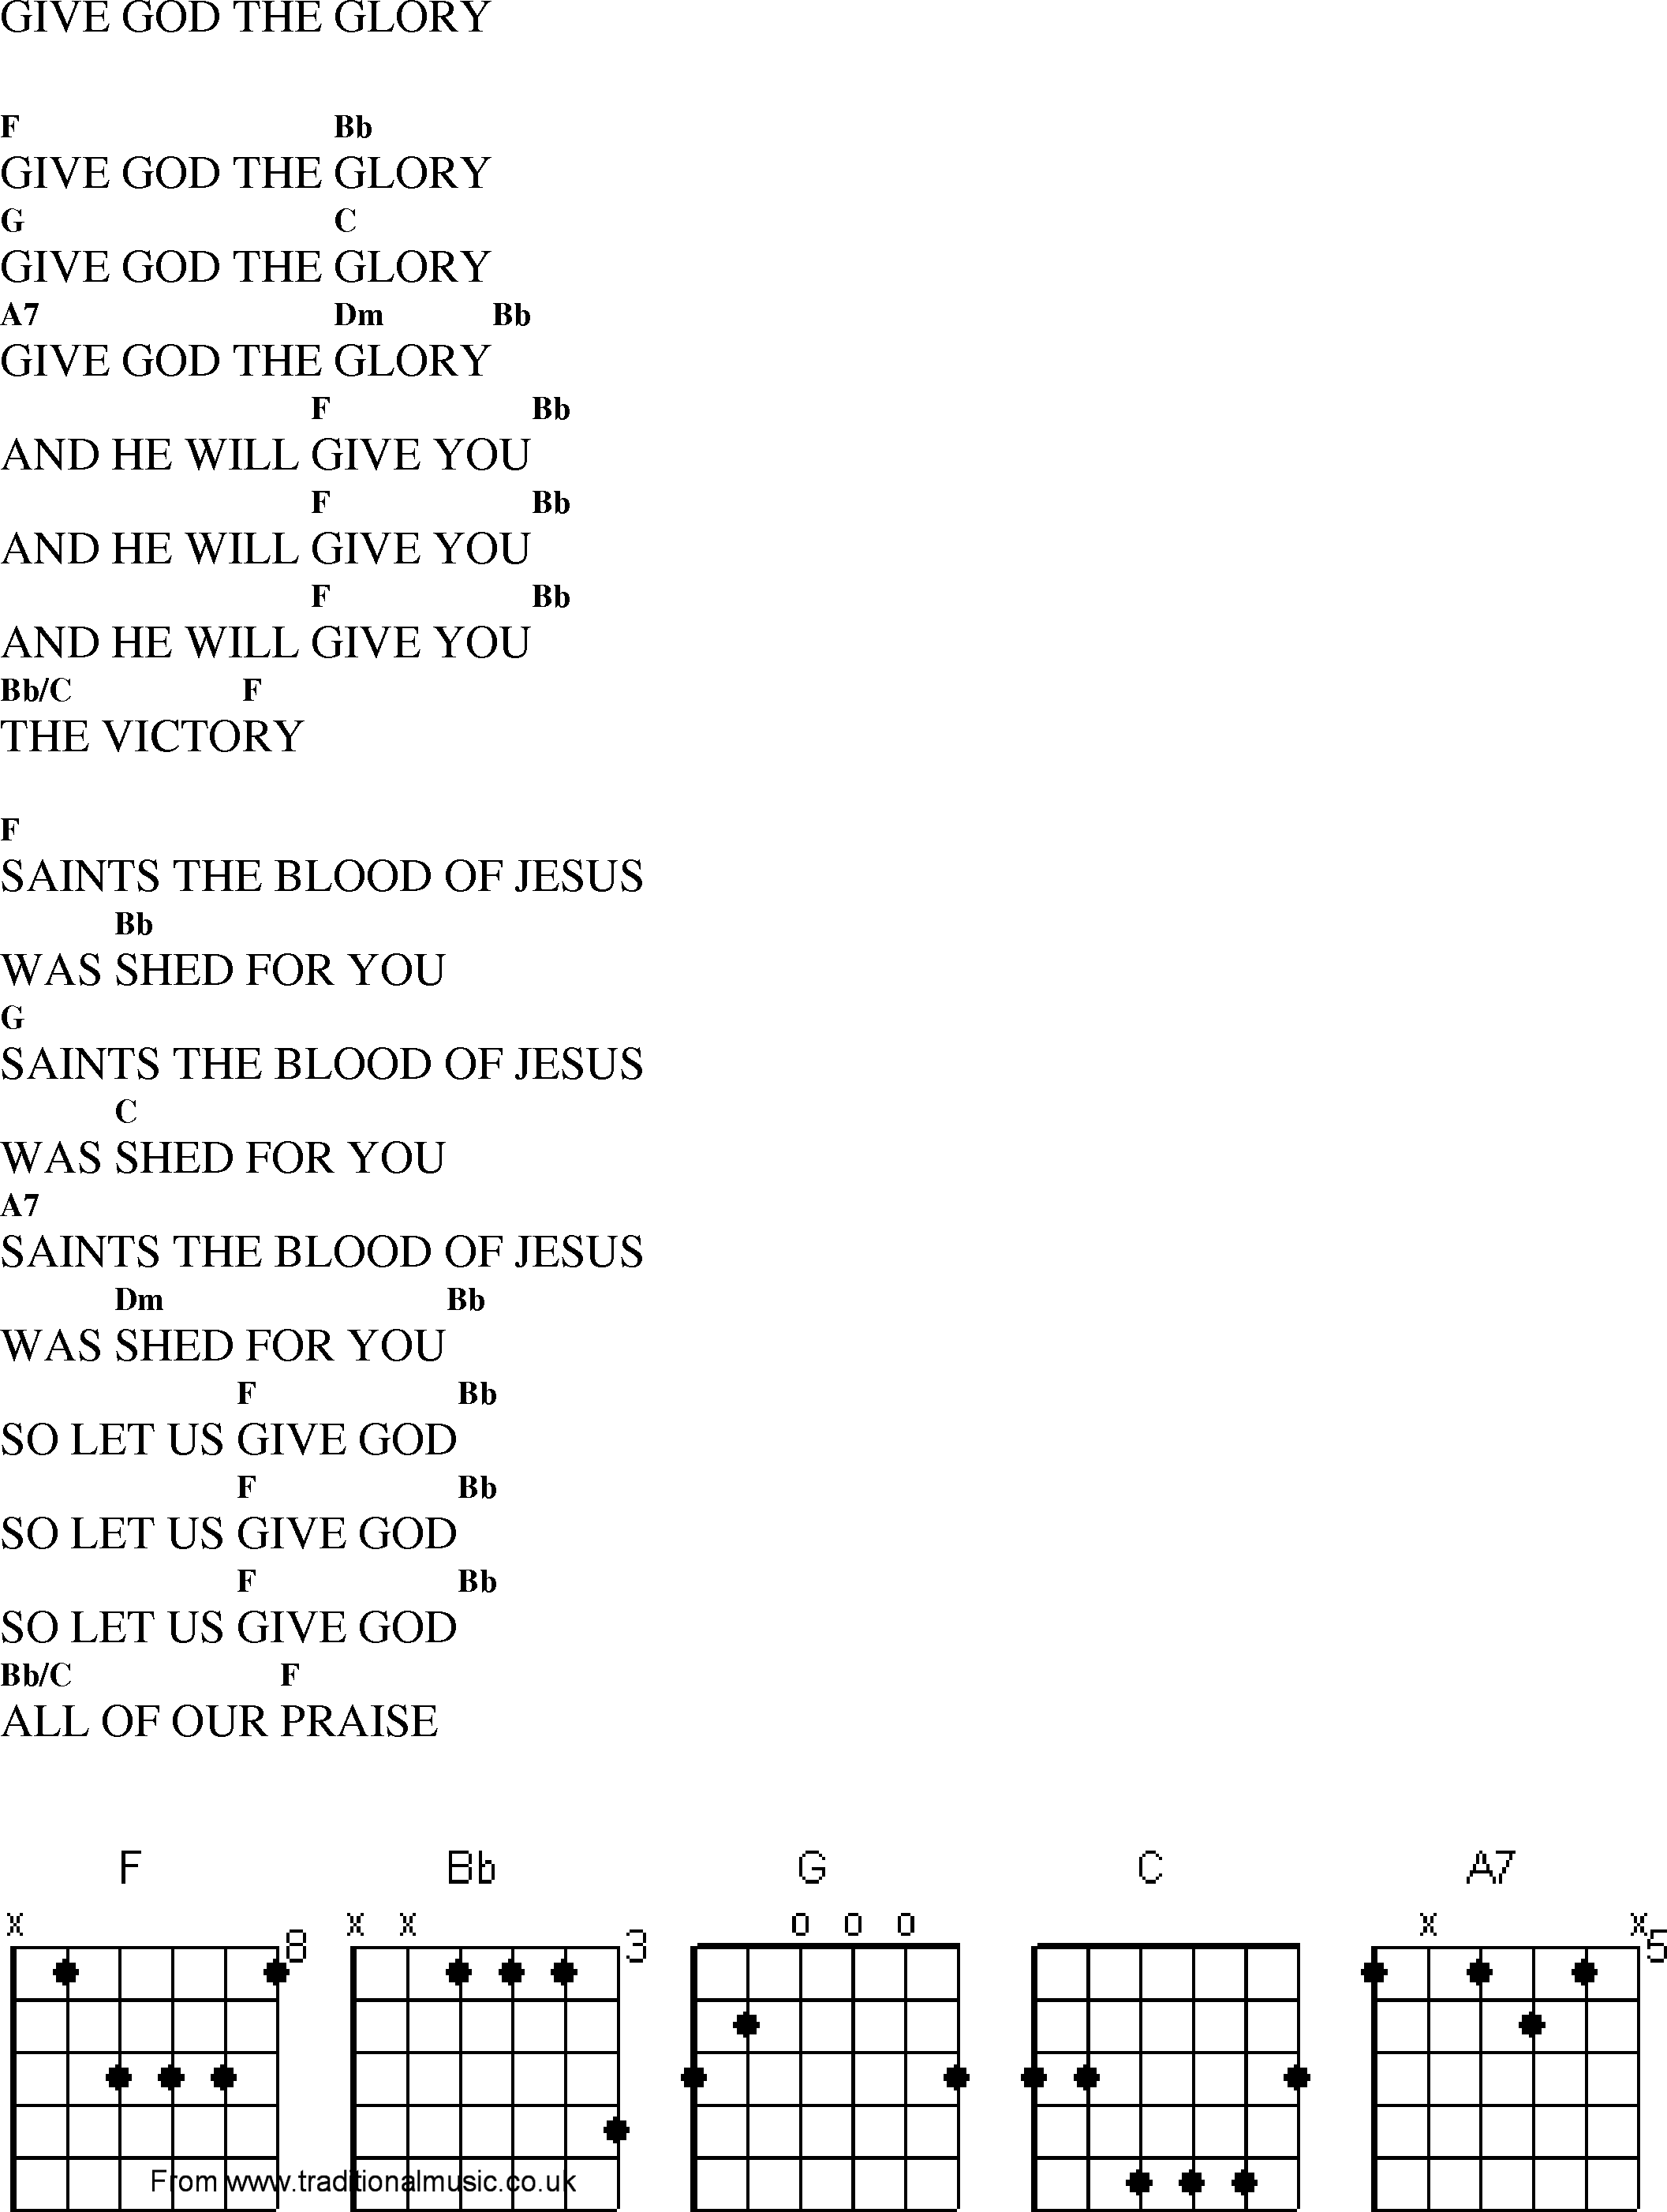 Gospel Song: give_god_the_glory, lyrics and chords.